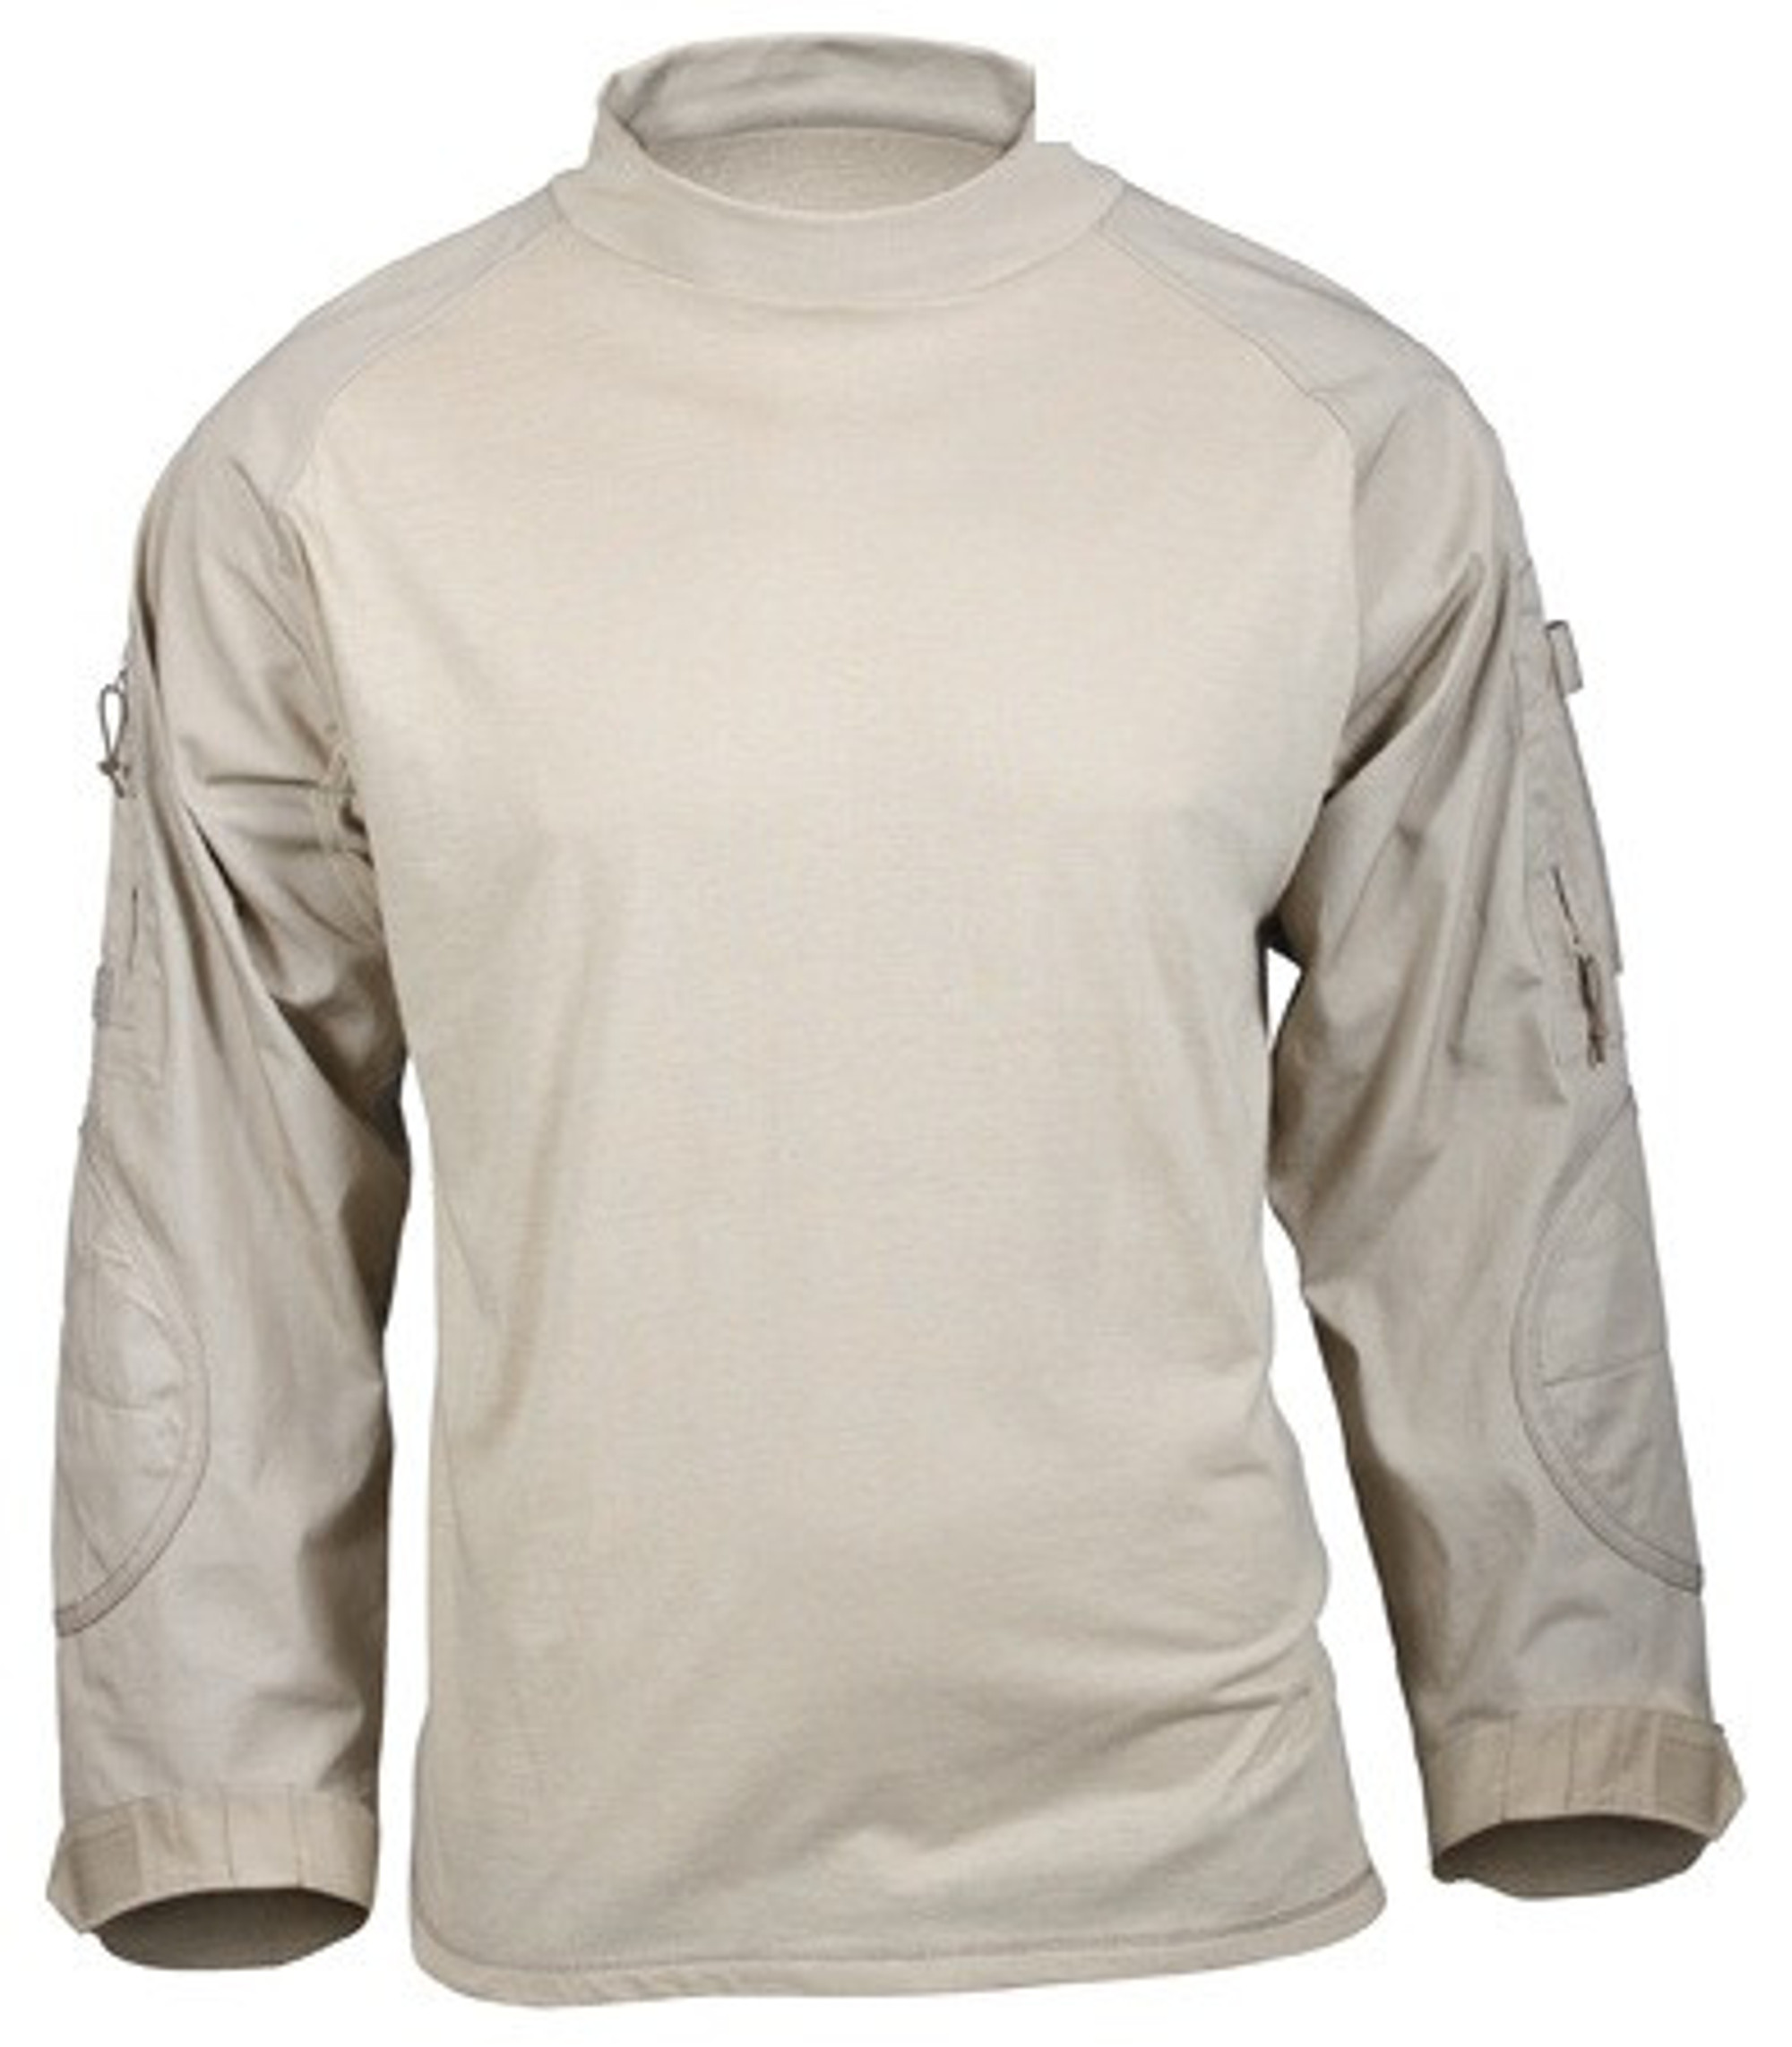 Rothco Military NYCO FR Fire Retardant Combat Shirt - Desert Sand